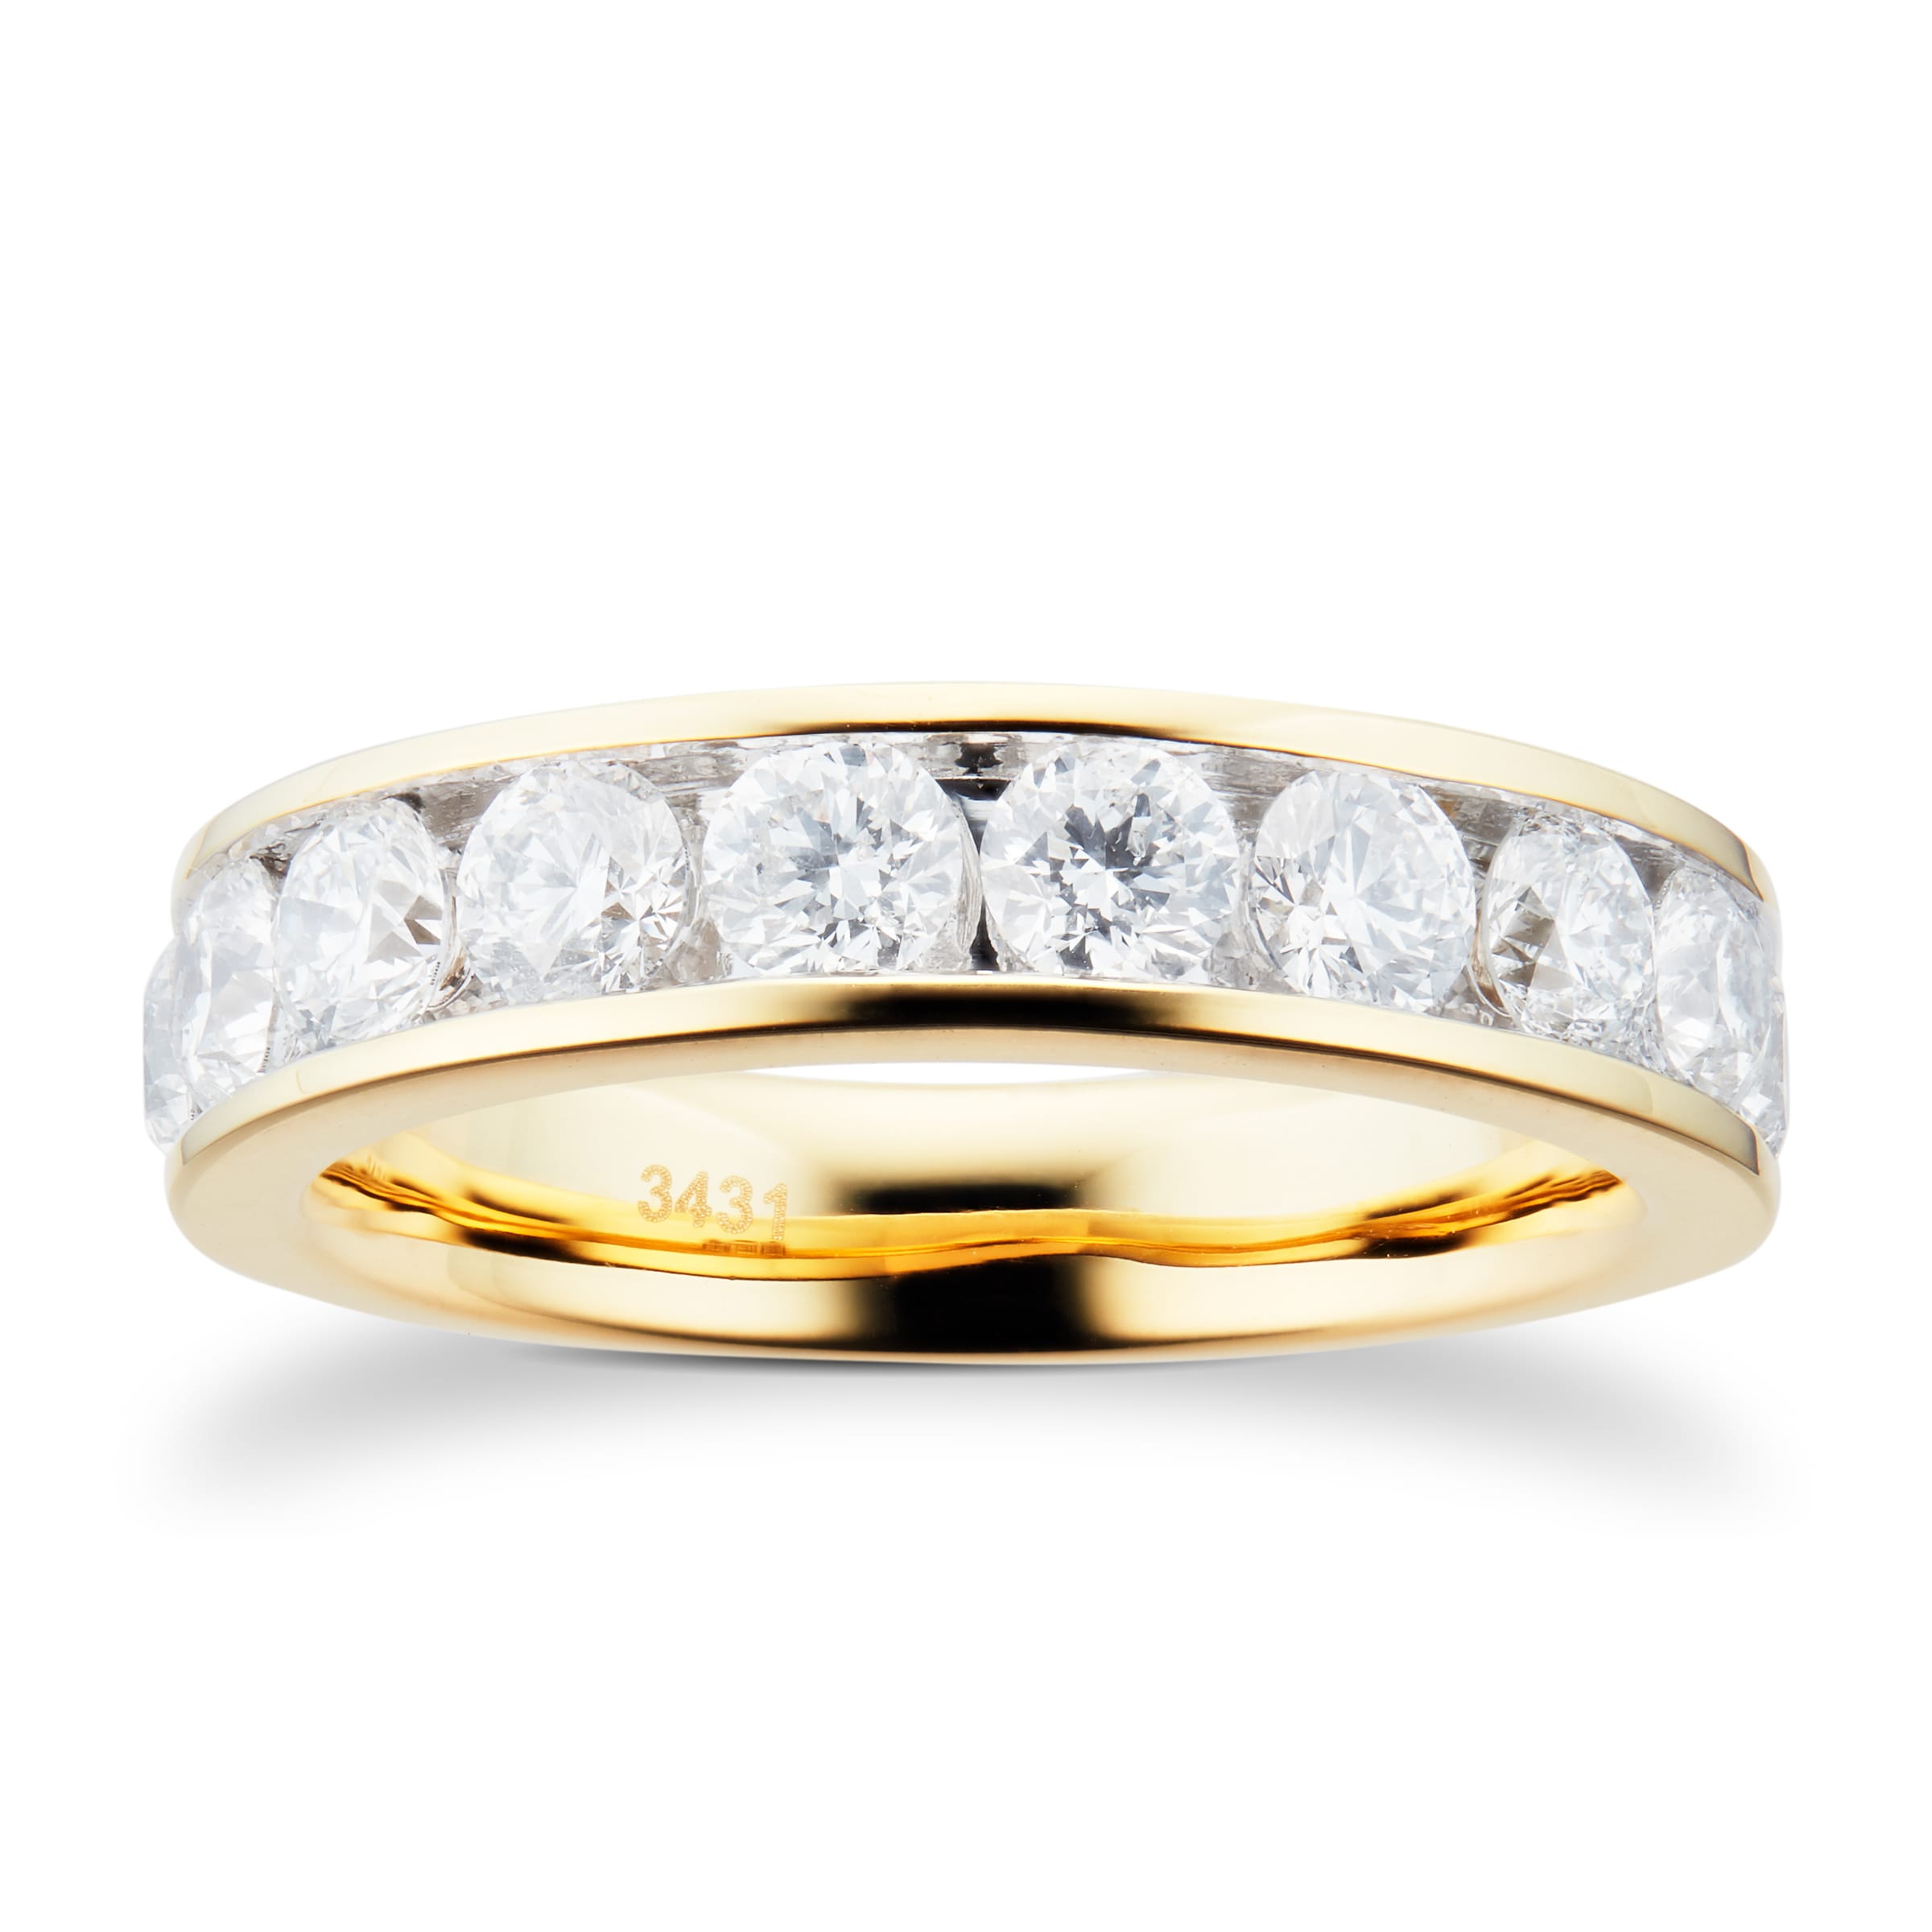 18ct Yellow Gold 1.50ct Brilliant Cut Goldsmiths Brightest Diamond Eternity Ring - Ring Size Q